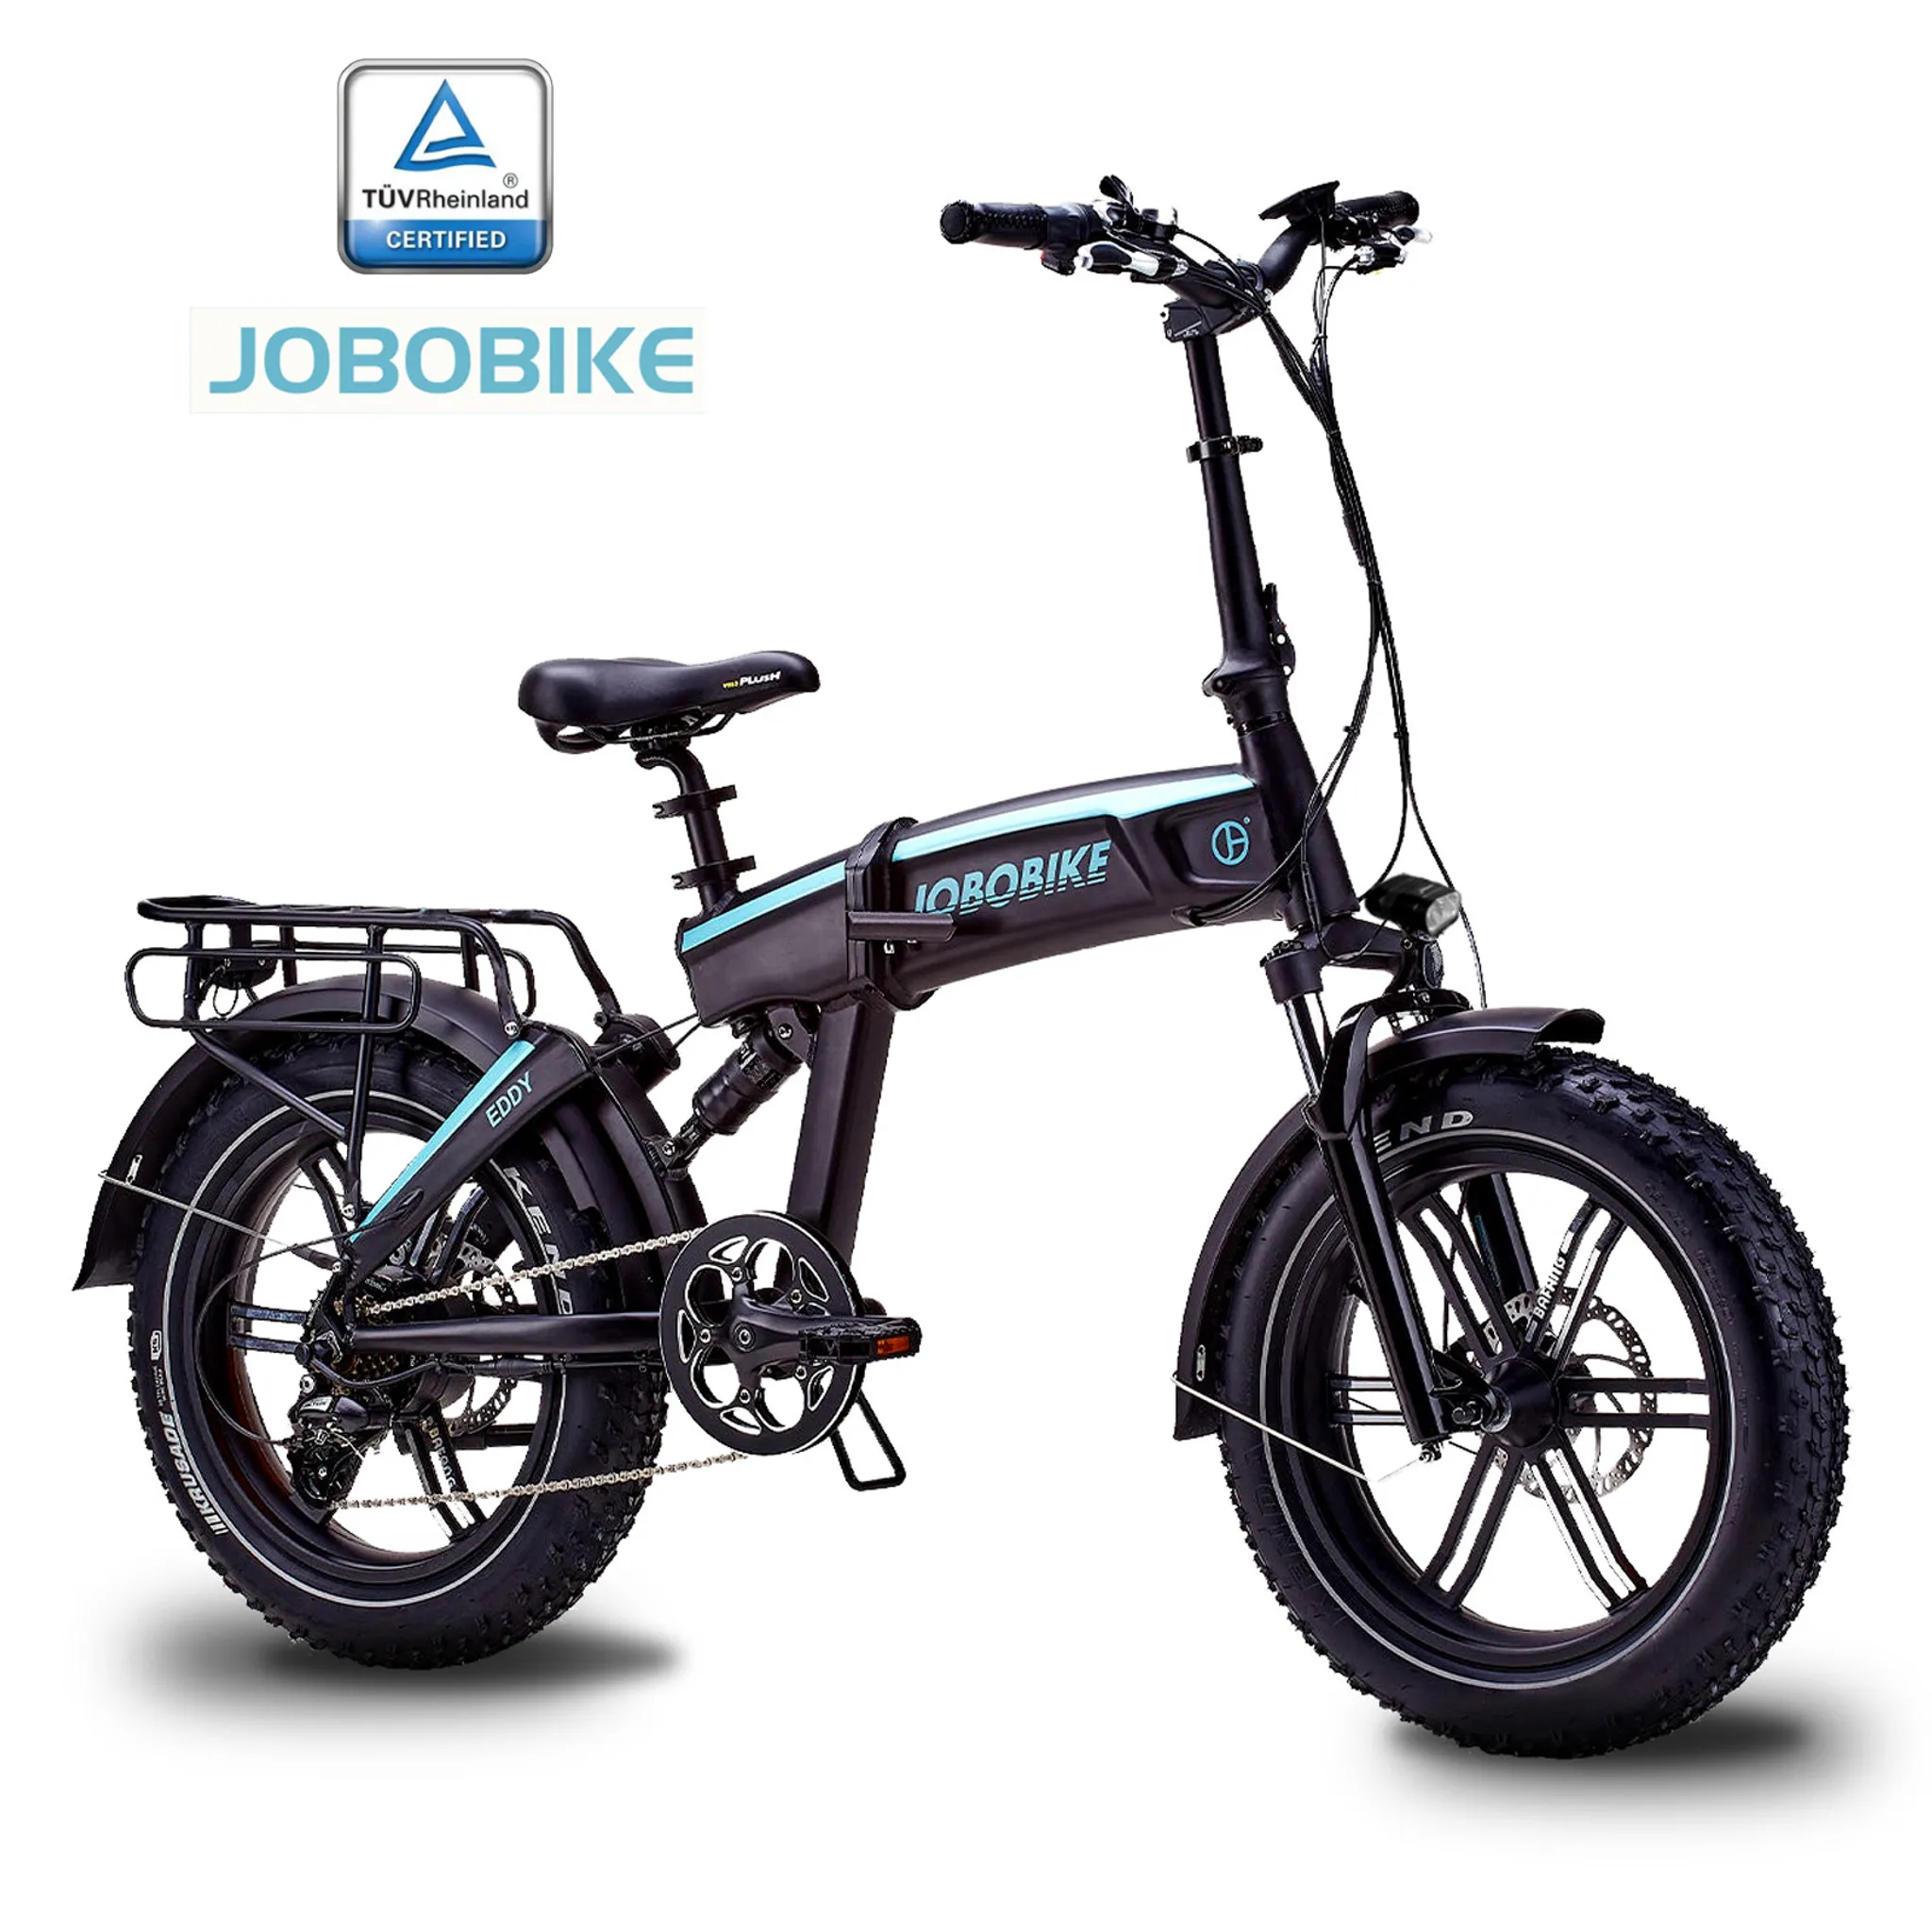 E-Bike Fat Reifen 20, Elektrofahrrad Mit 36V 11Ah Batterie, E-Bike für  Herren Damen kaufen bei